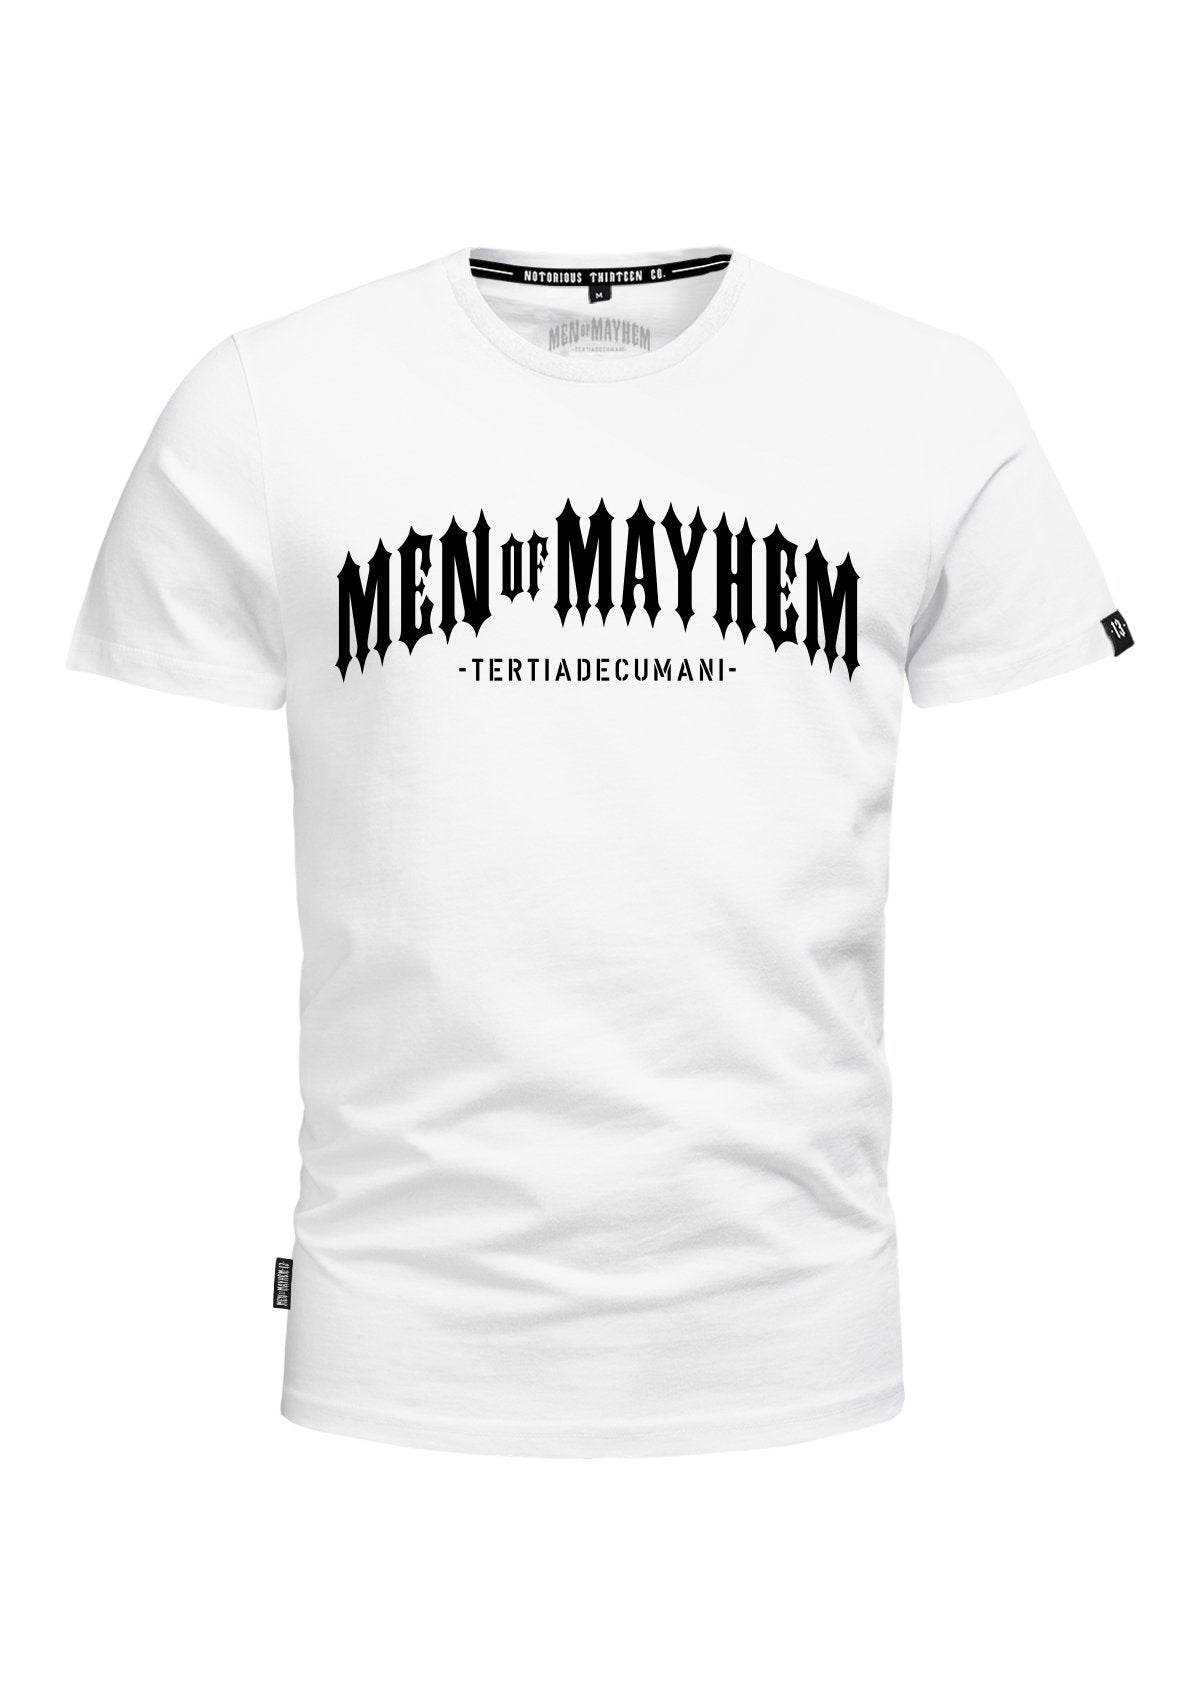 T-Shirt Mayhem Classic W/S - MEN OF MAYHEM - ALAIKO-EXCHANGES-MM-M-1010-MC-WS - Classic - Herren